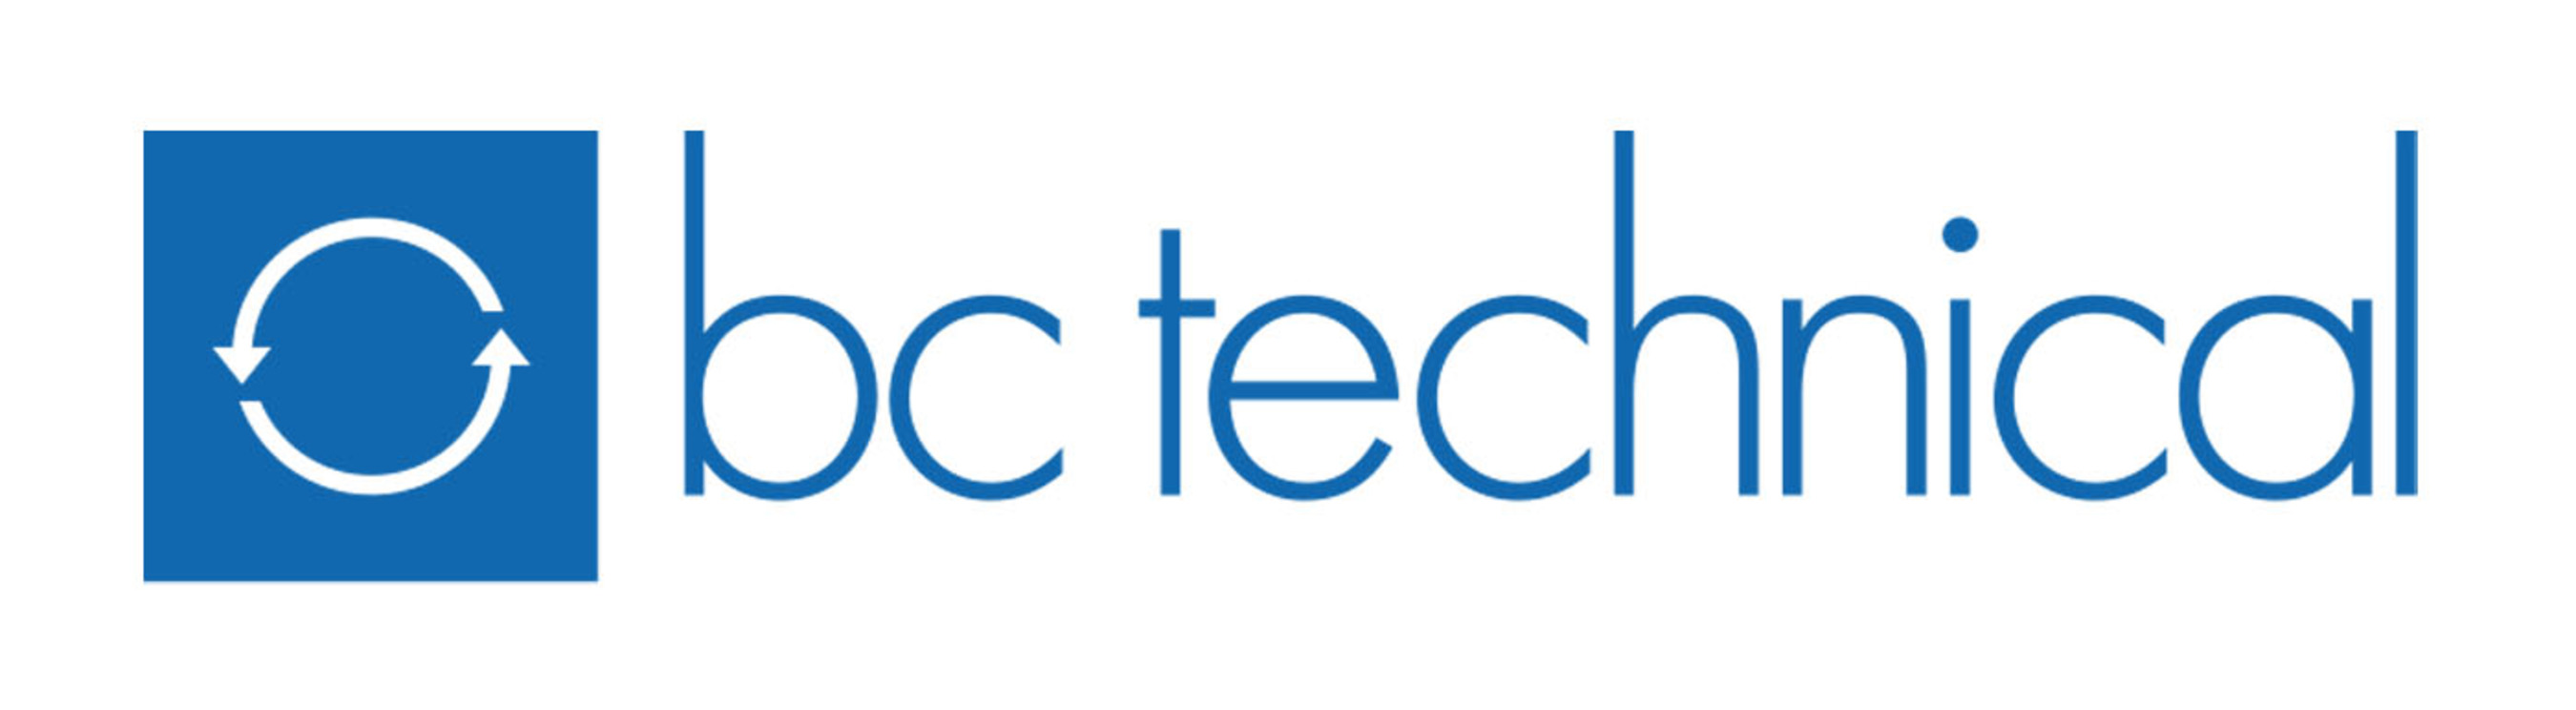 BC Technical logo. (PRNewsFoto/BC Technical, Inc.) (PRNewsFoto/)